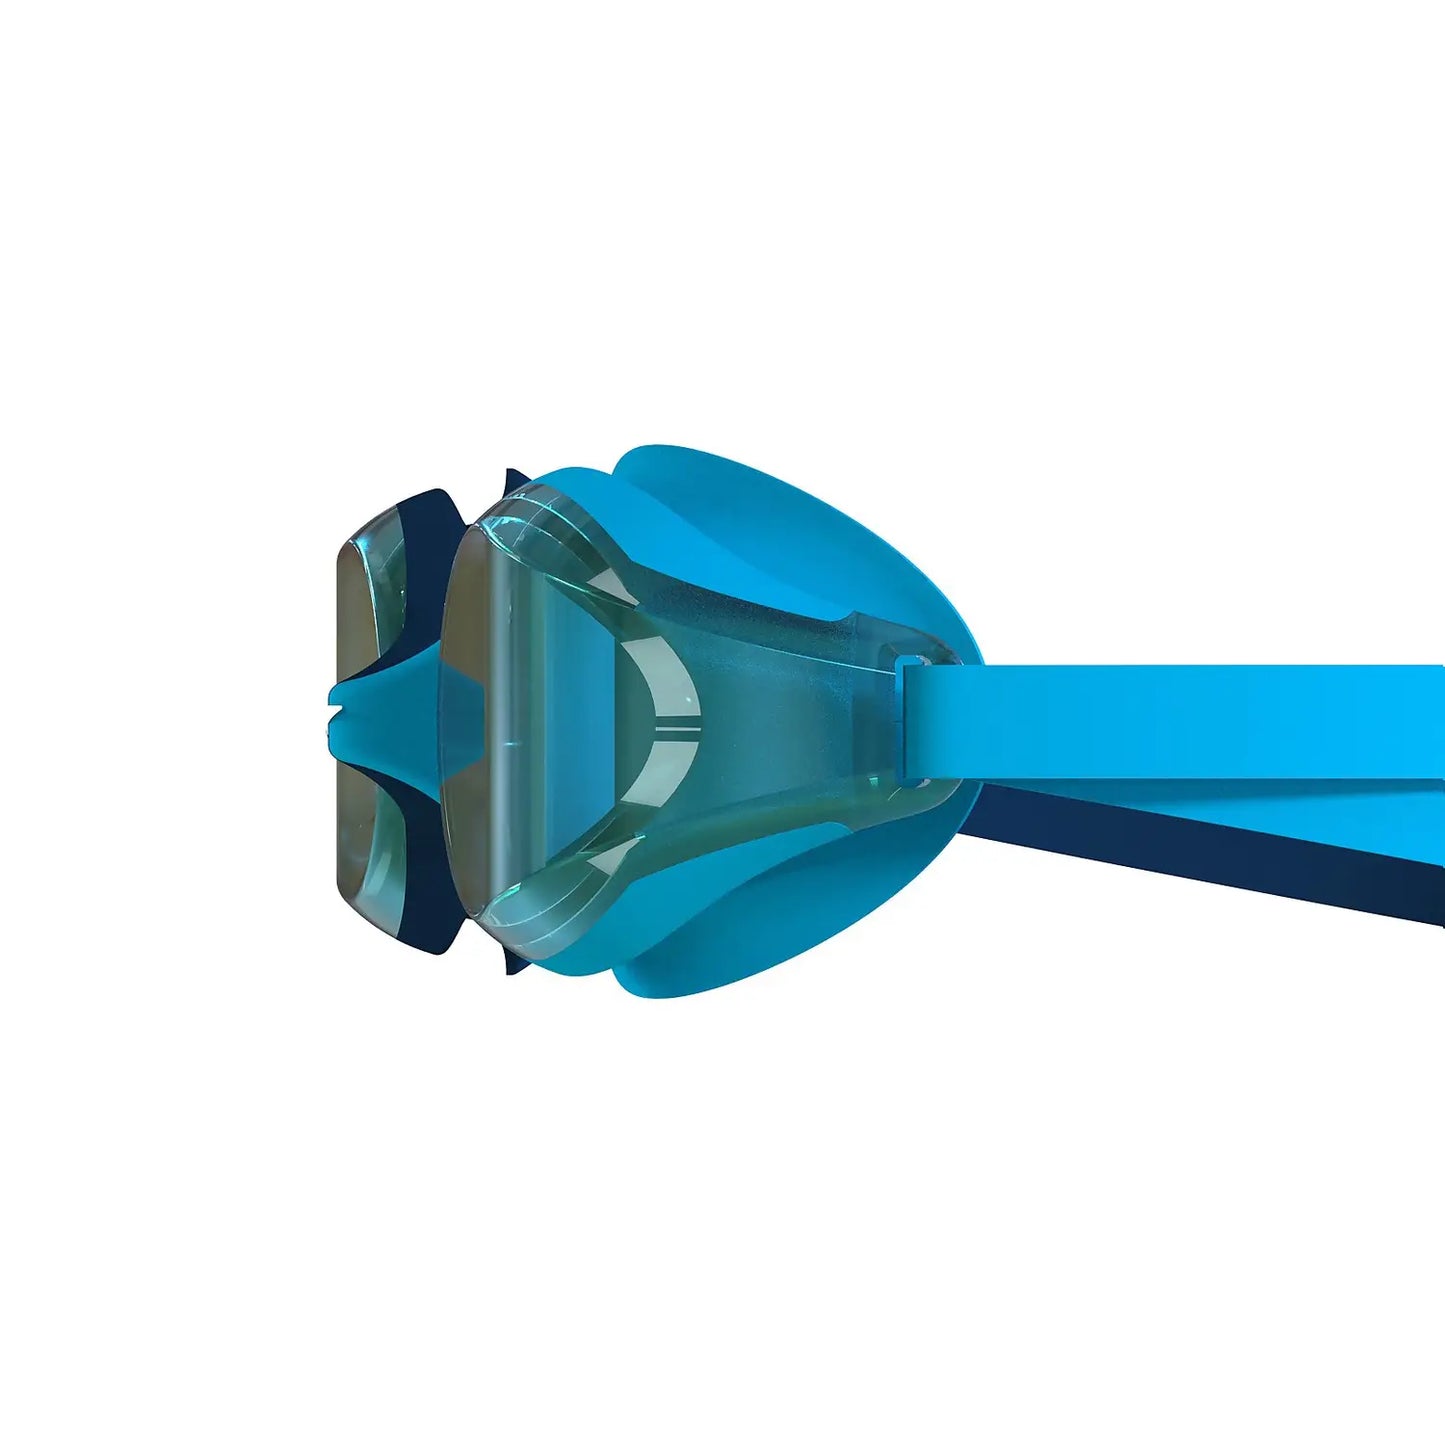 Speedo Unisex Hyper Flyer Limited Edition Mirrored Junior Ages 6-14 Goggle - Blue Navy